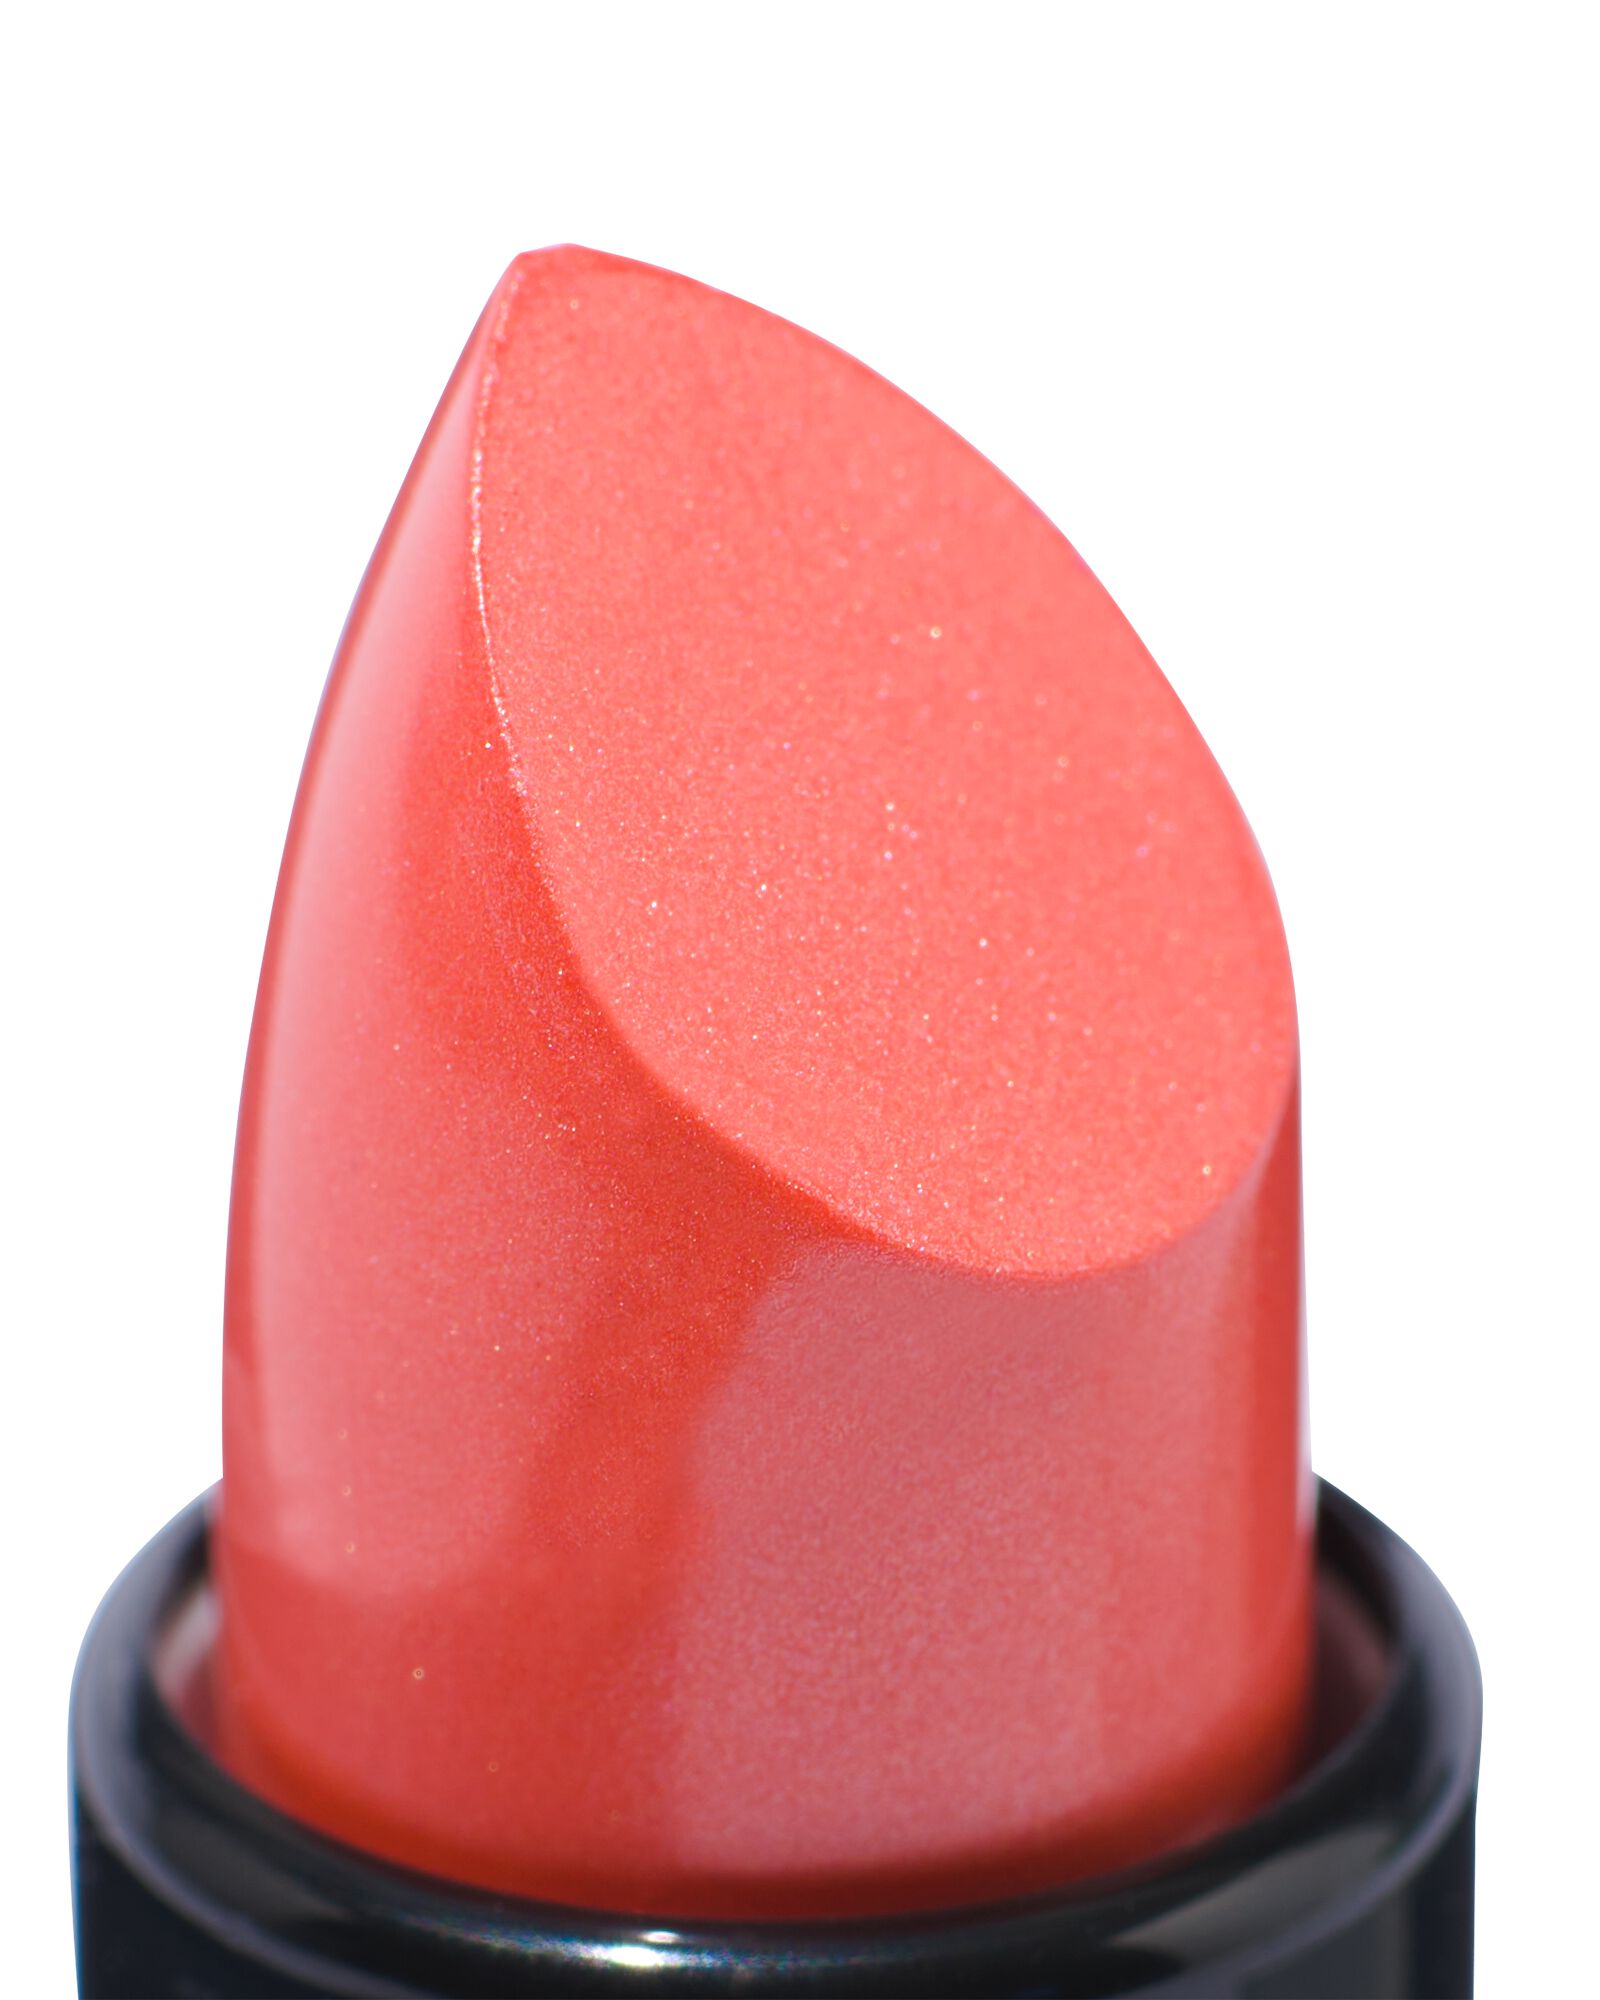 HEMA Moisturising Lipstick 25 Queen Of Orange - Satin Finish (lichtoranje)